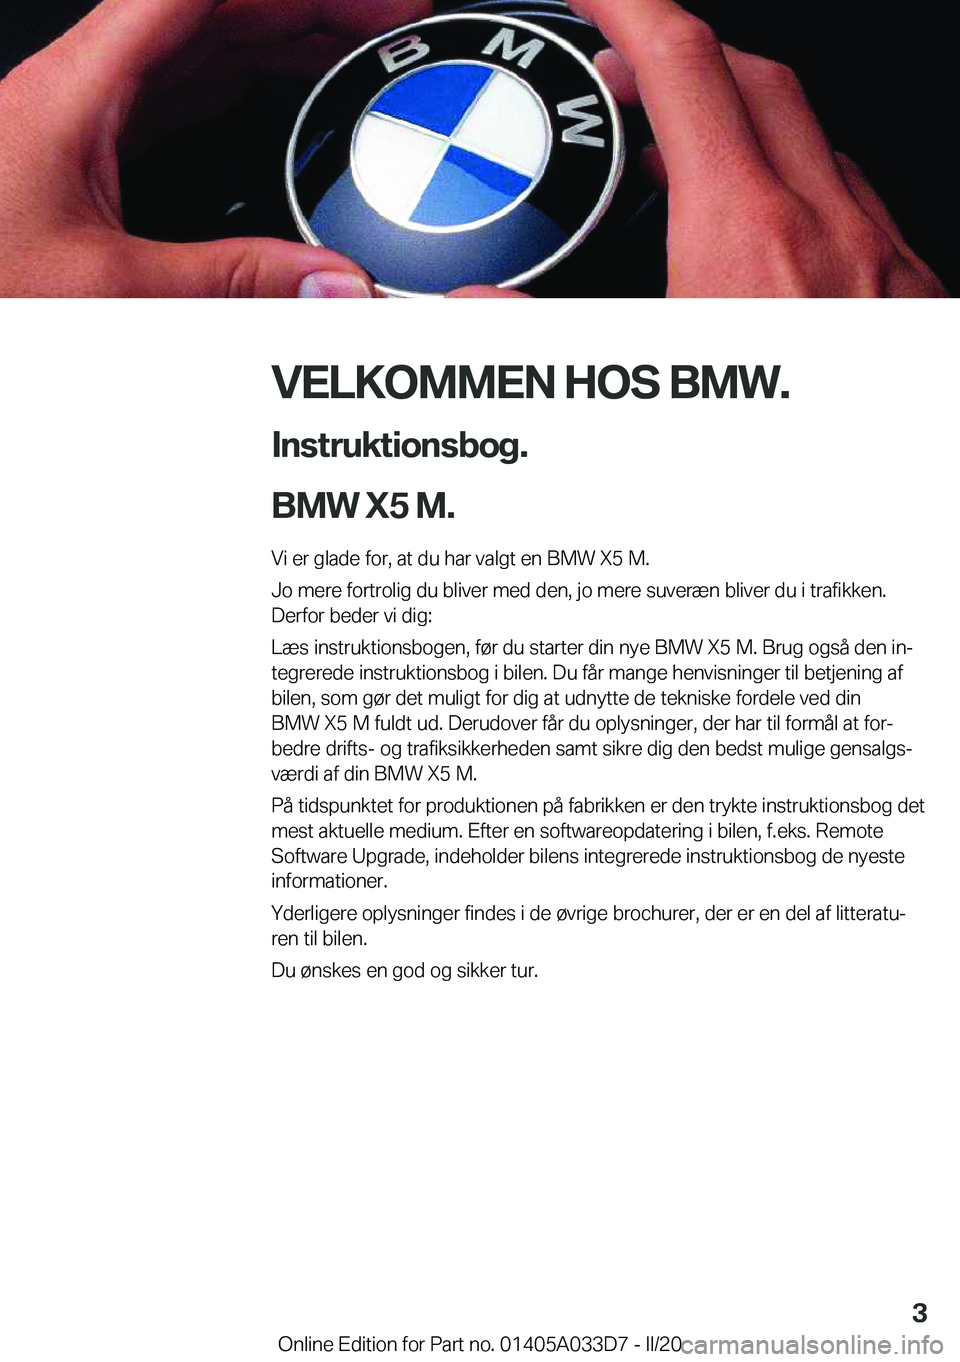 BMW X5 M 2020  InstruktionsbØger (in Danish) �V�E�L�K�O�M�M�E�N��H�O�S��B�M�W�.
�I�n�s�t�r�u�k�t�i�o�n�s�b�o�g�.
�B�M�W��X�5��M�. �V�i��e�r��g�l�a�d�e��f�o�r�,��a�t��d�u��h�a�r��v�a�l�g�t��e�n��B�M�W��X�5��M�.
�J�o��m�e�r�e��f�o